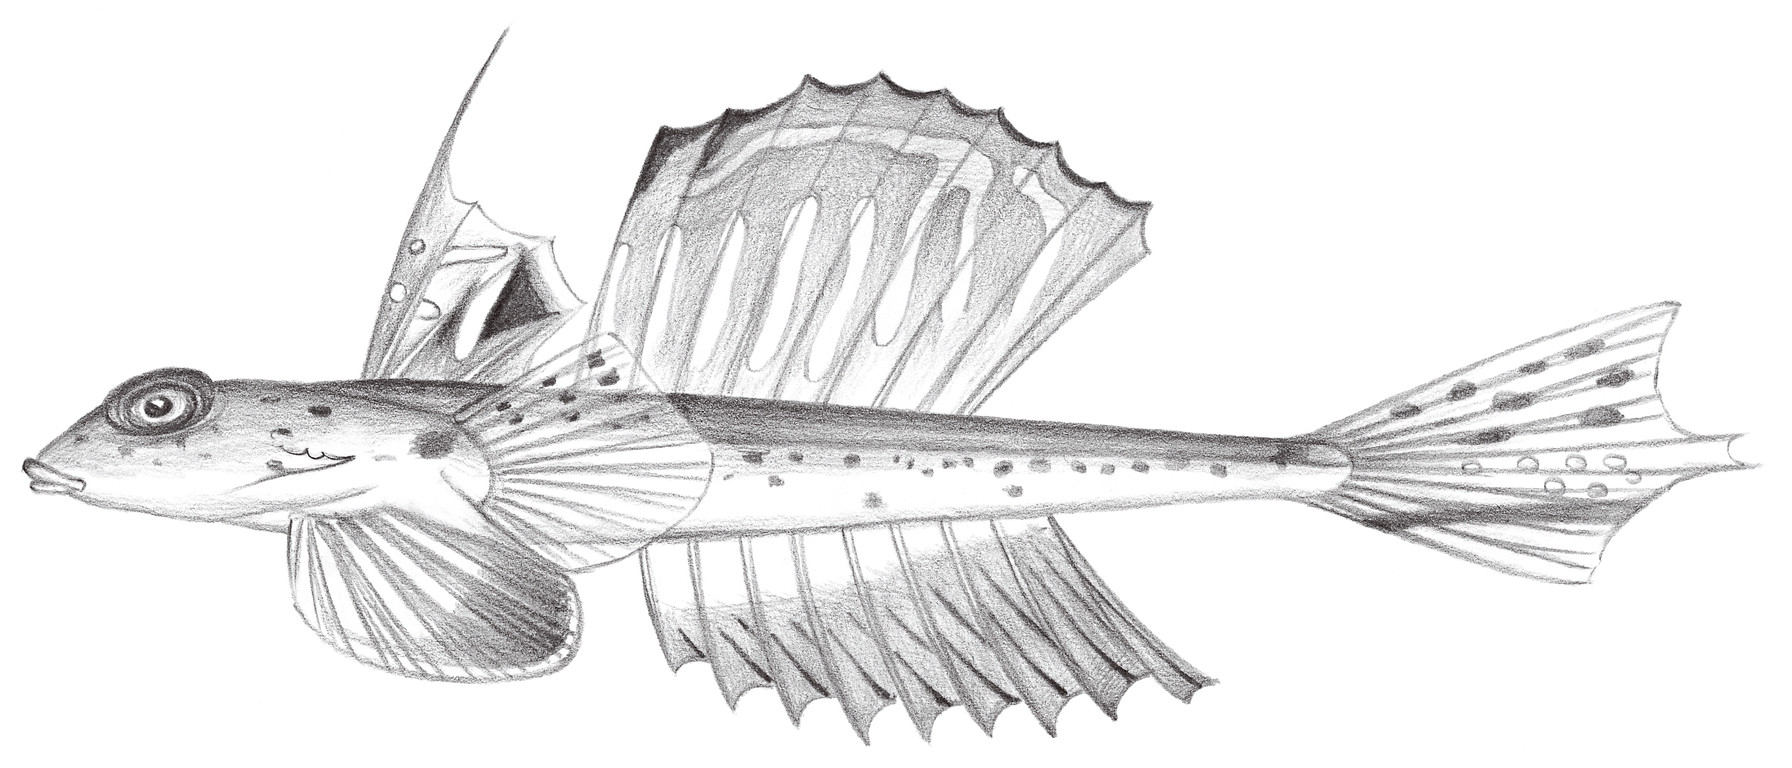 2011.	台灣深海 Bathycallionymus formosanus (Fricke, 1981)